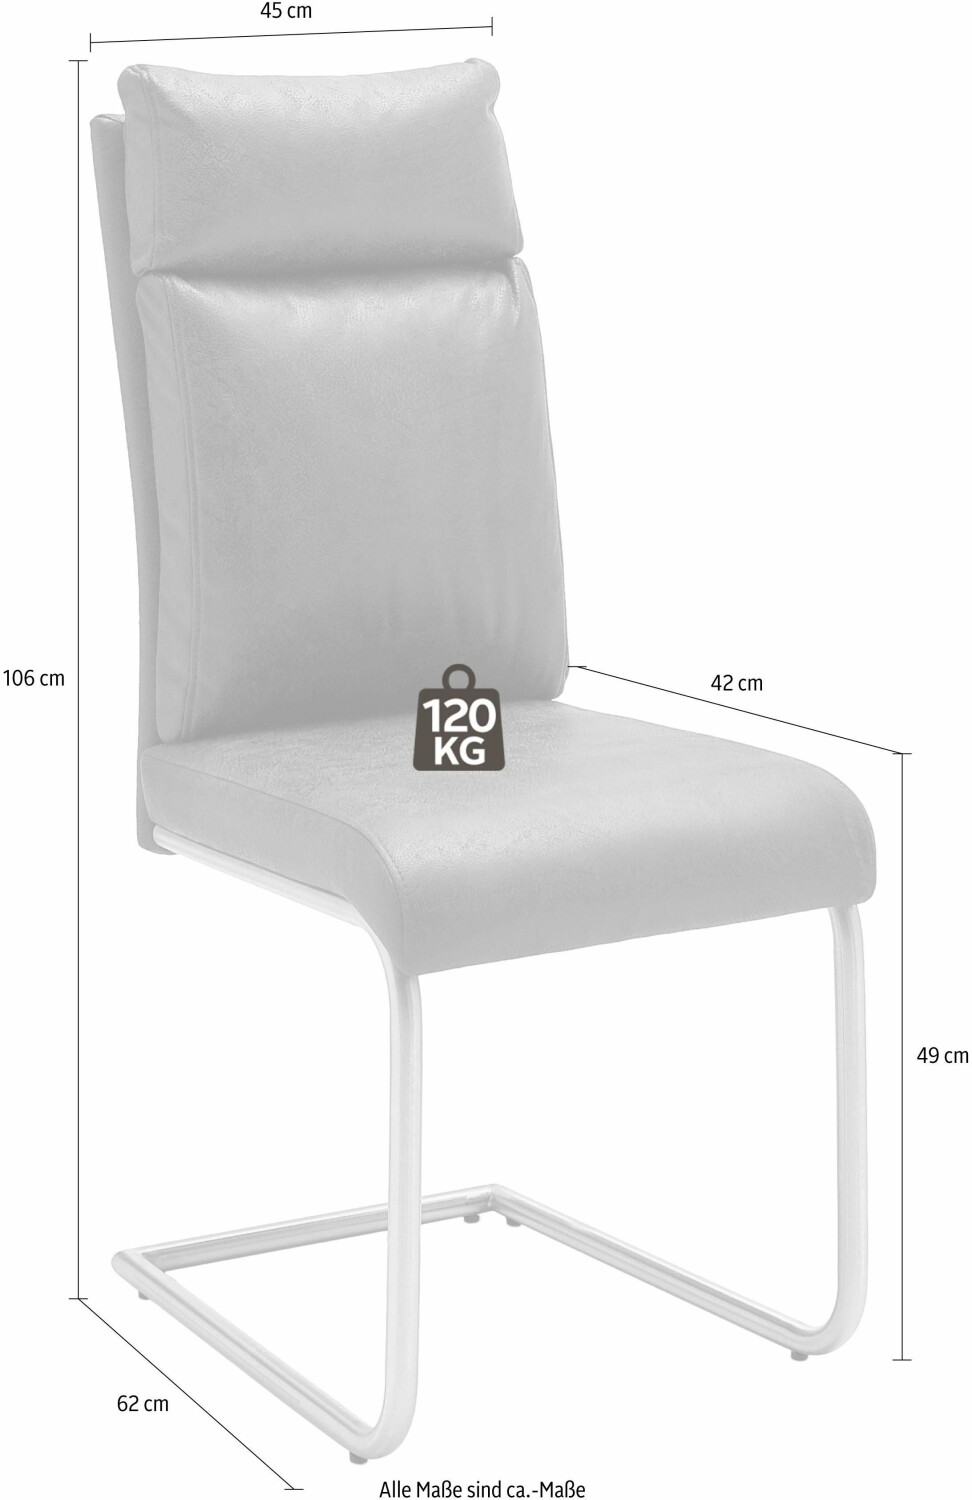 MCA Furniture Pia PIRE34 103,41 | bei € ab Preisvergleich